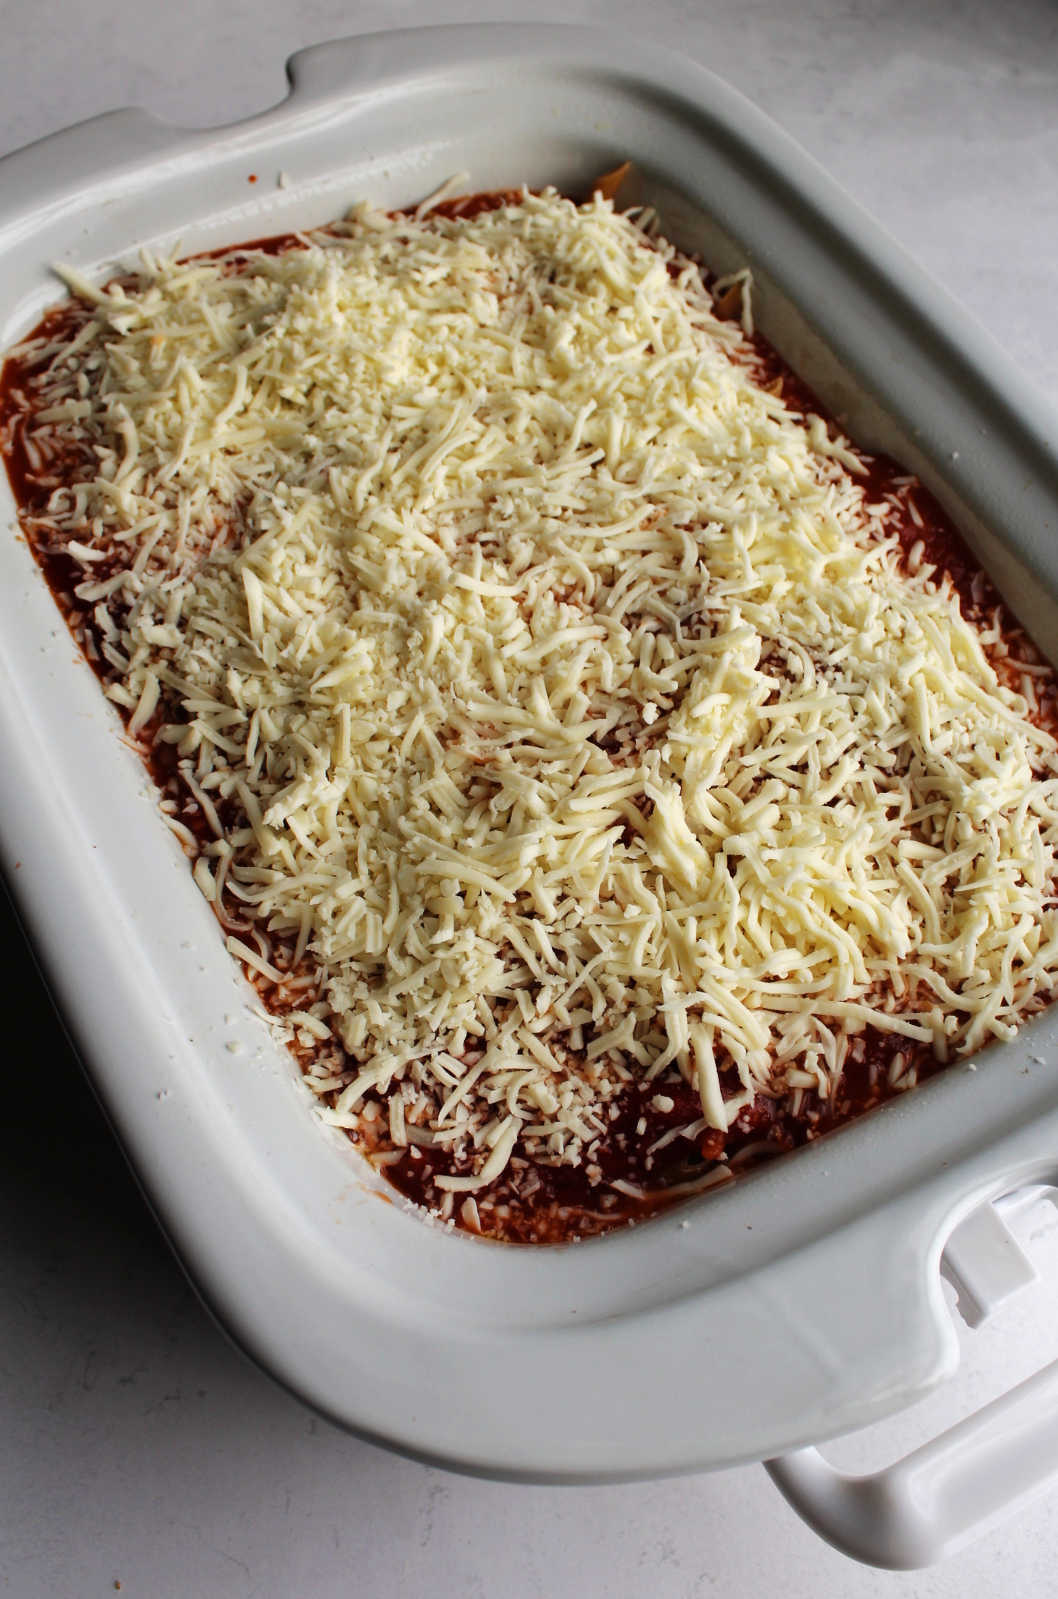 Shredded mozzarella over pasta in slow cooker.